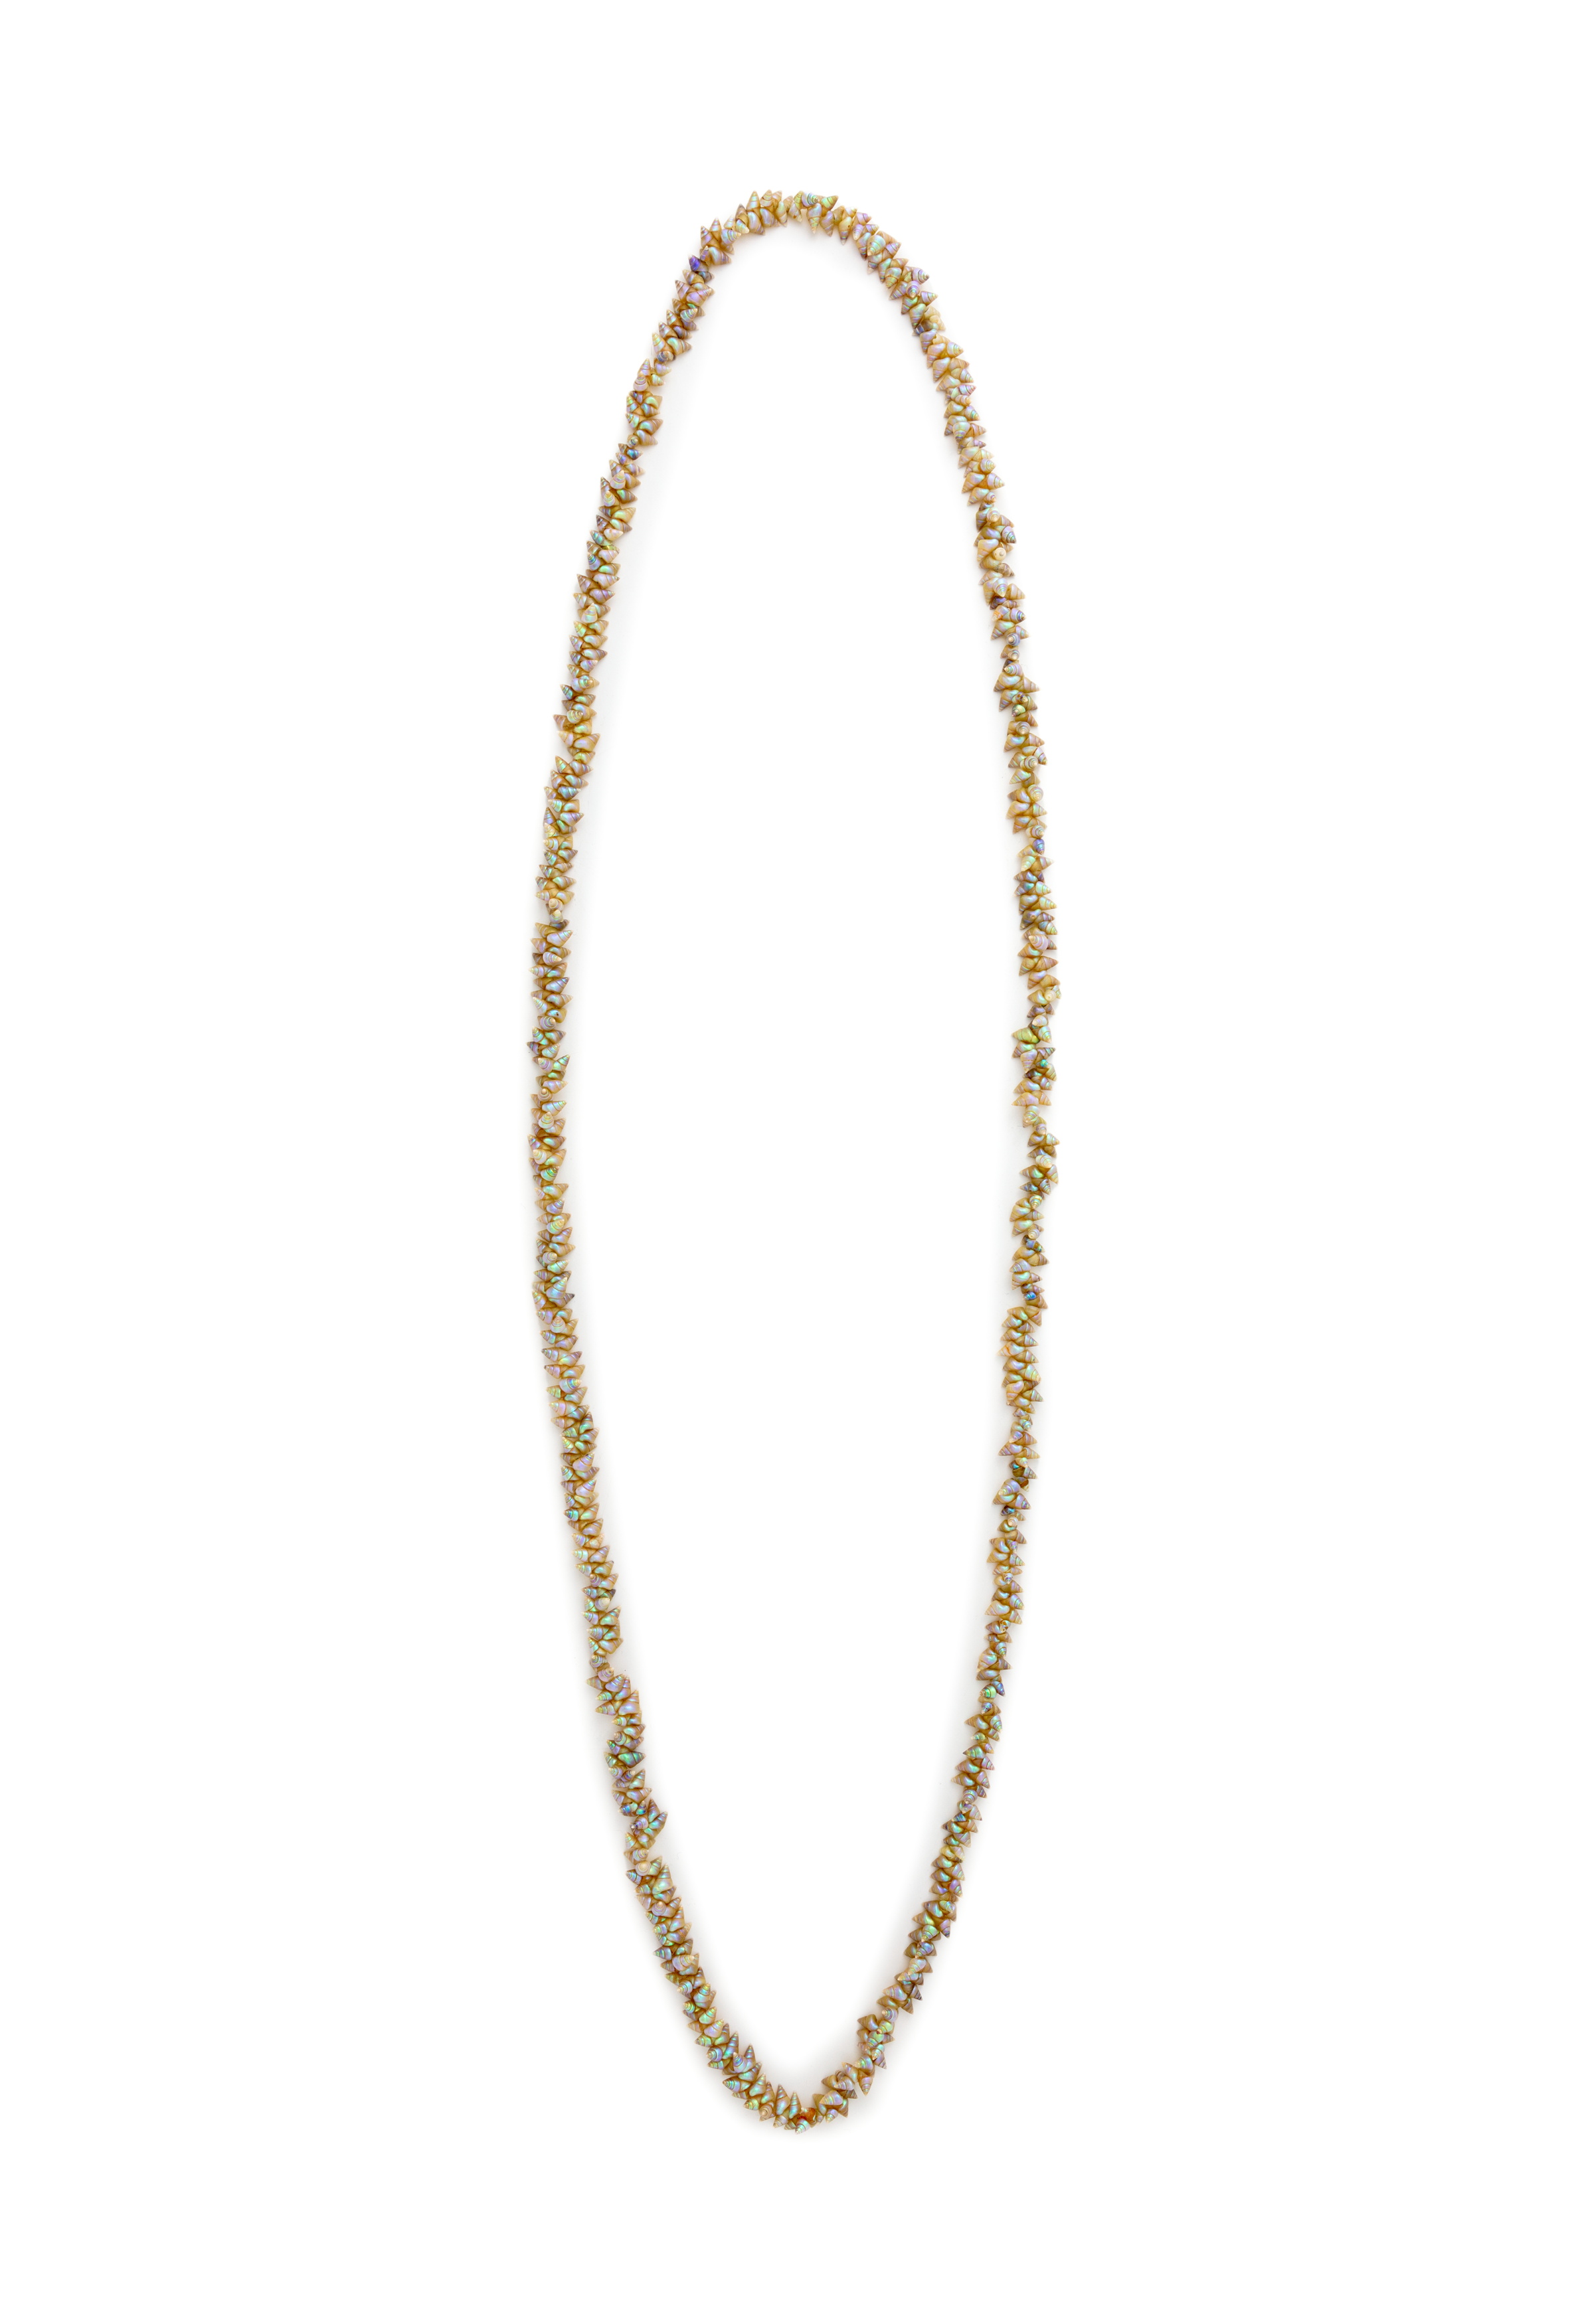 Shell necklace by Lola Greeno